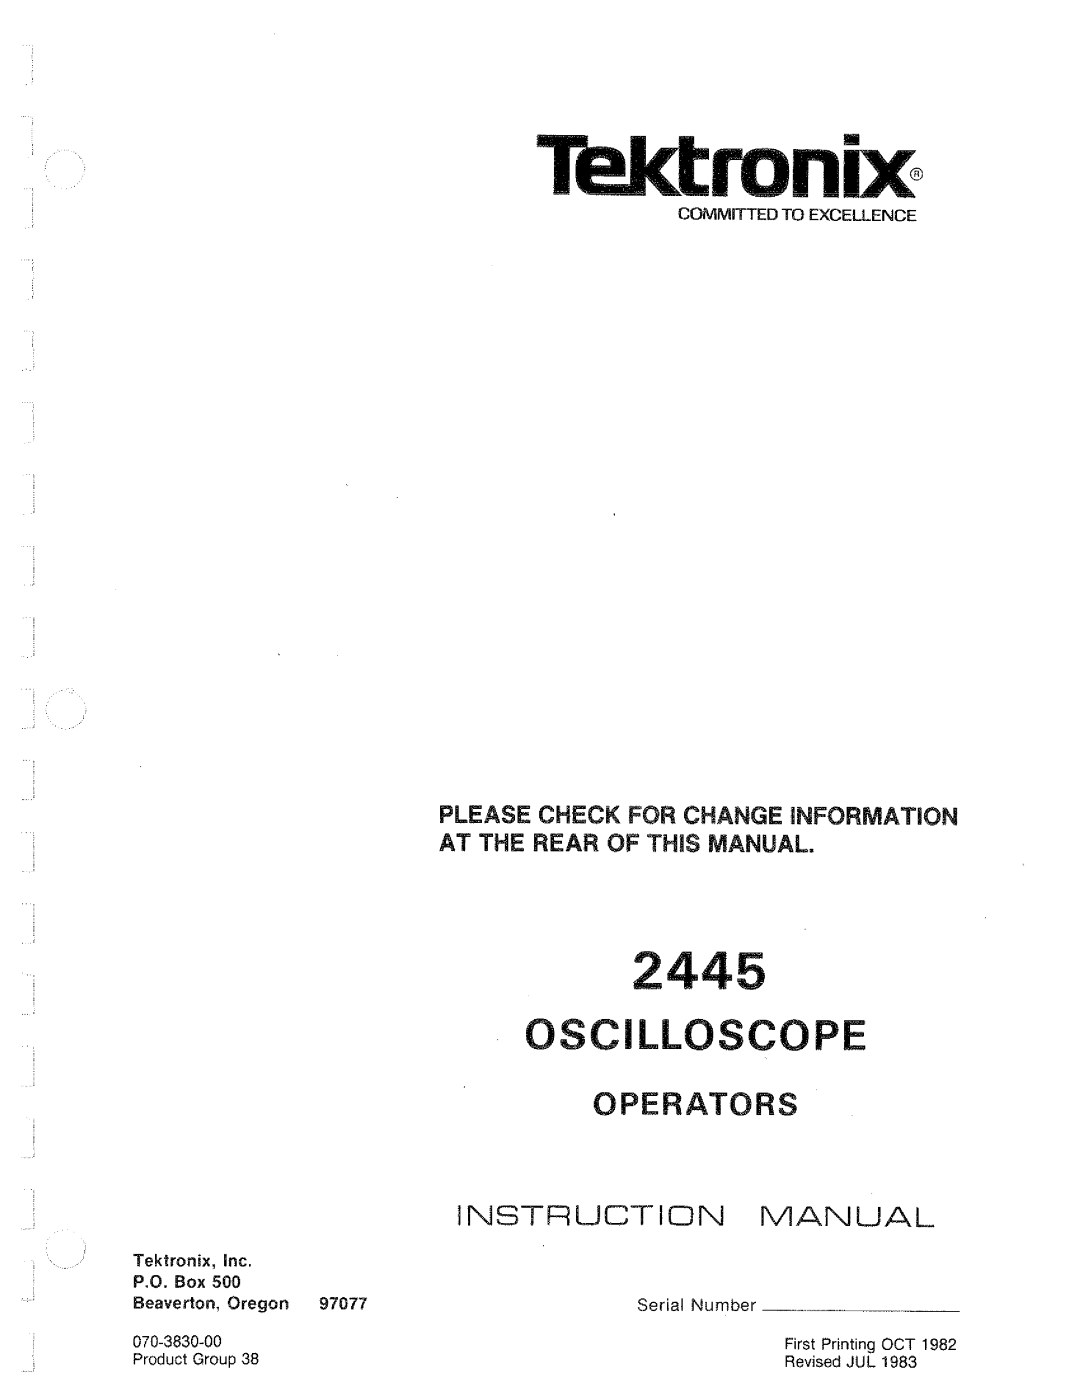 Tektronix 2445 manual 